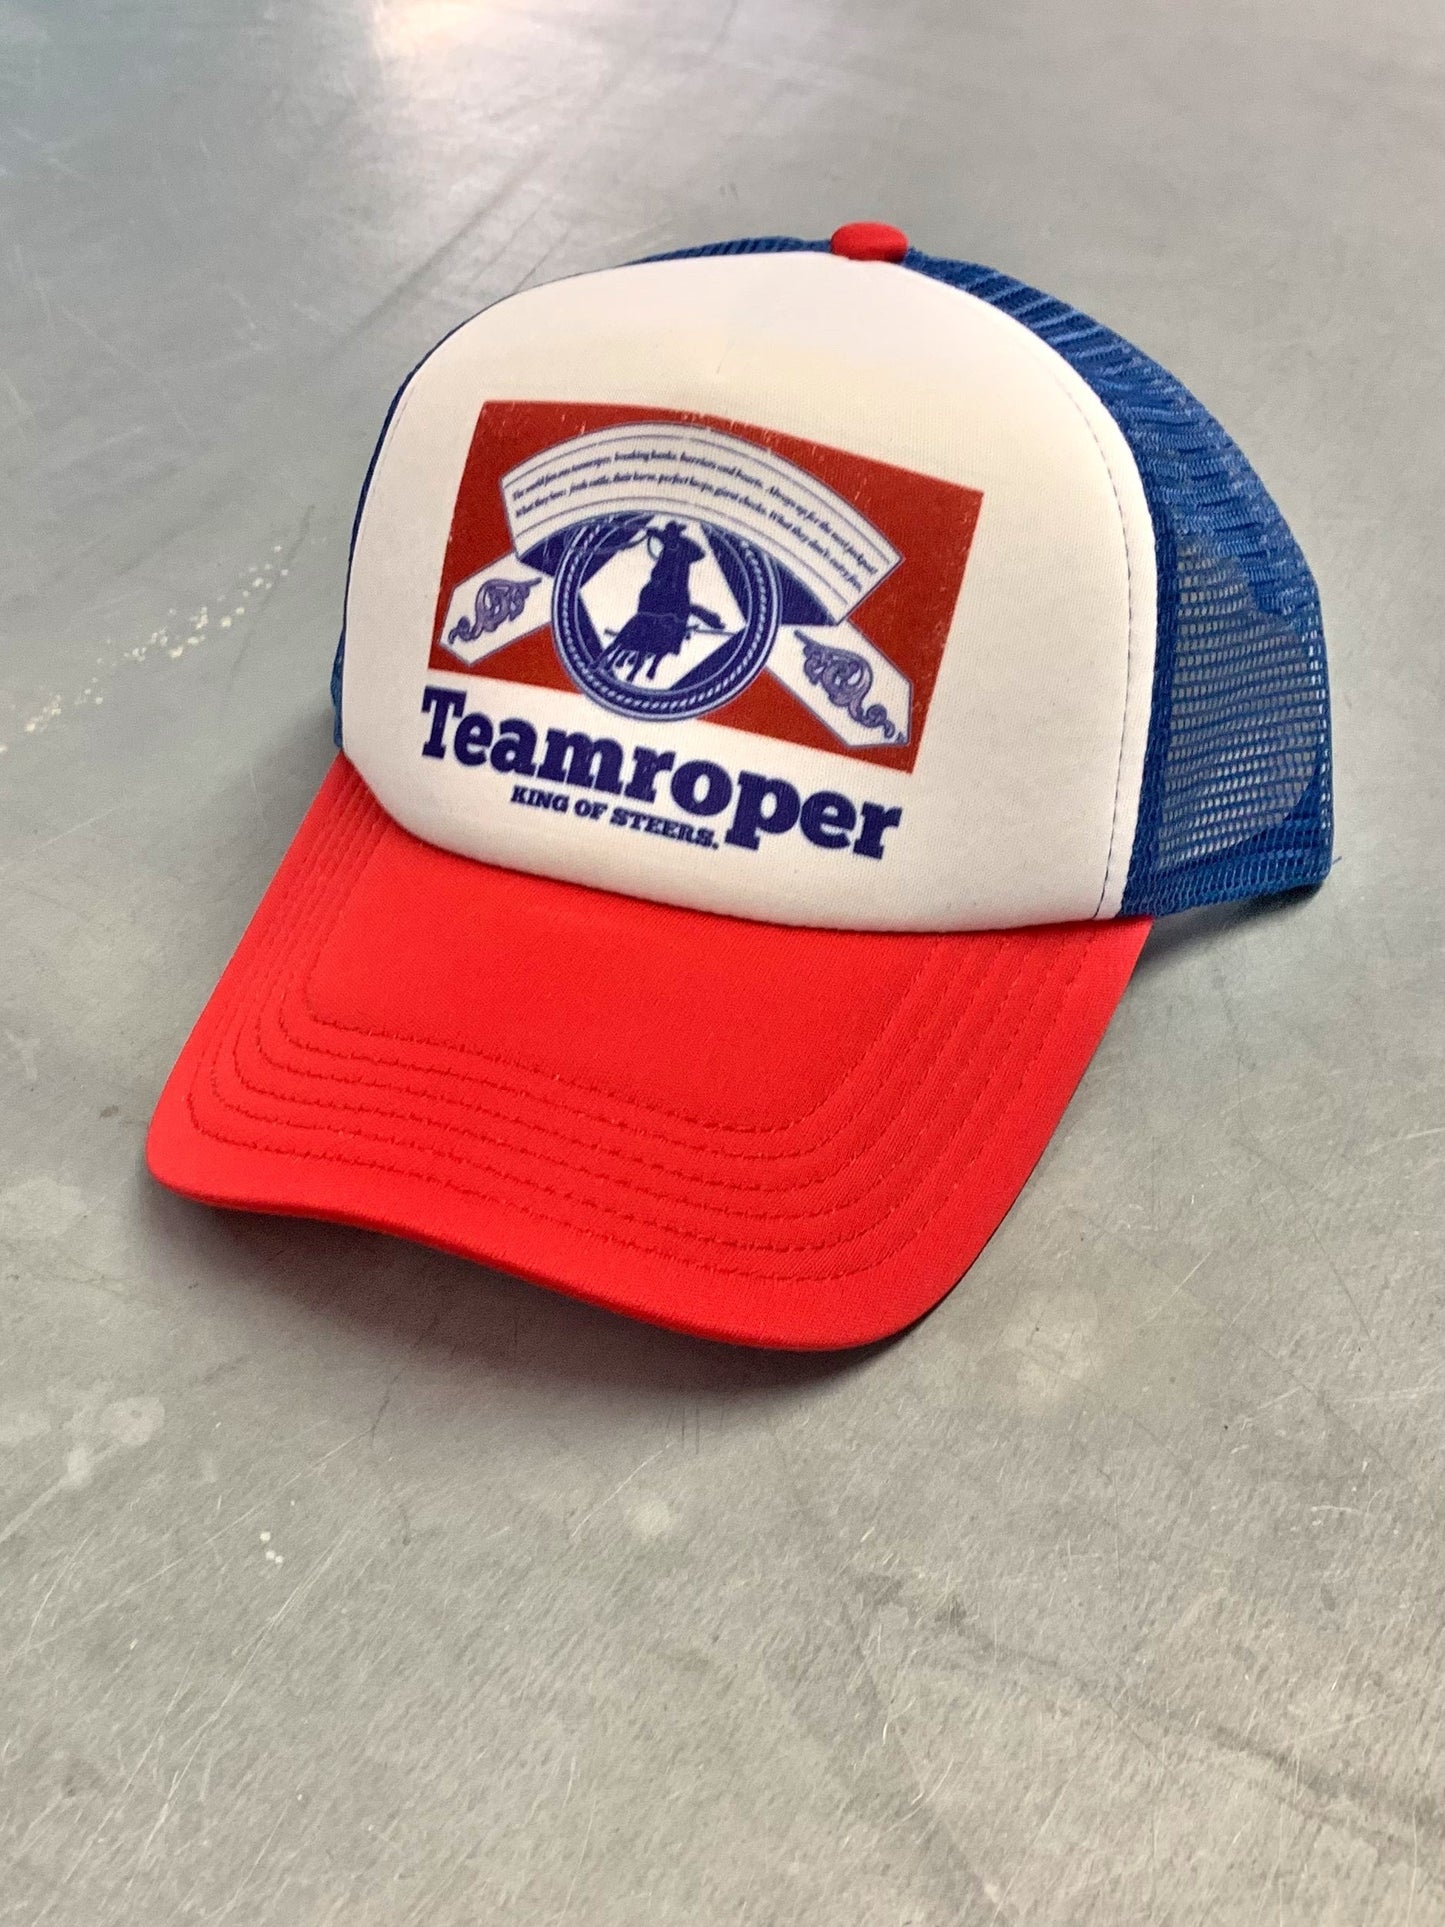 Team roper - King of Steers foam trucker hat